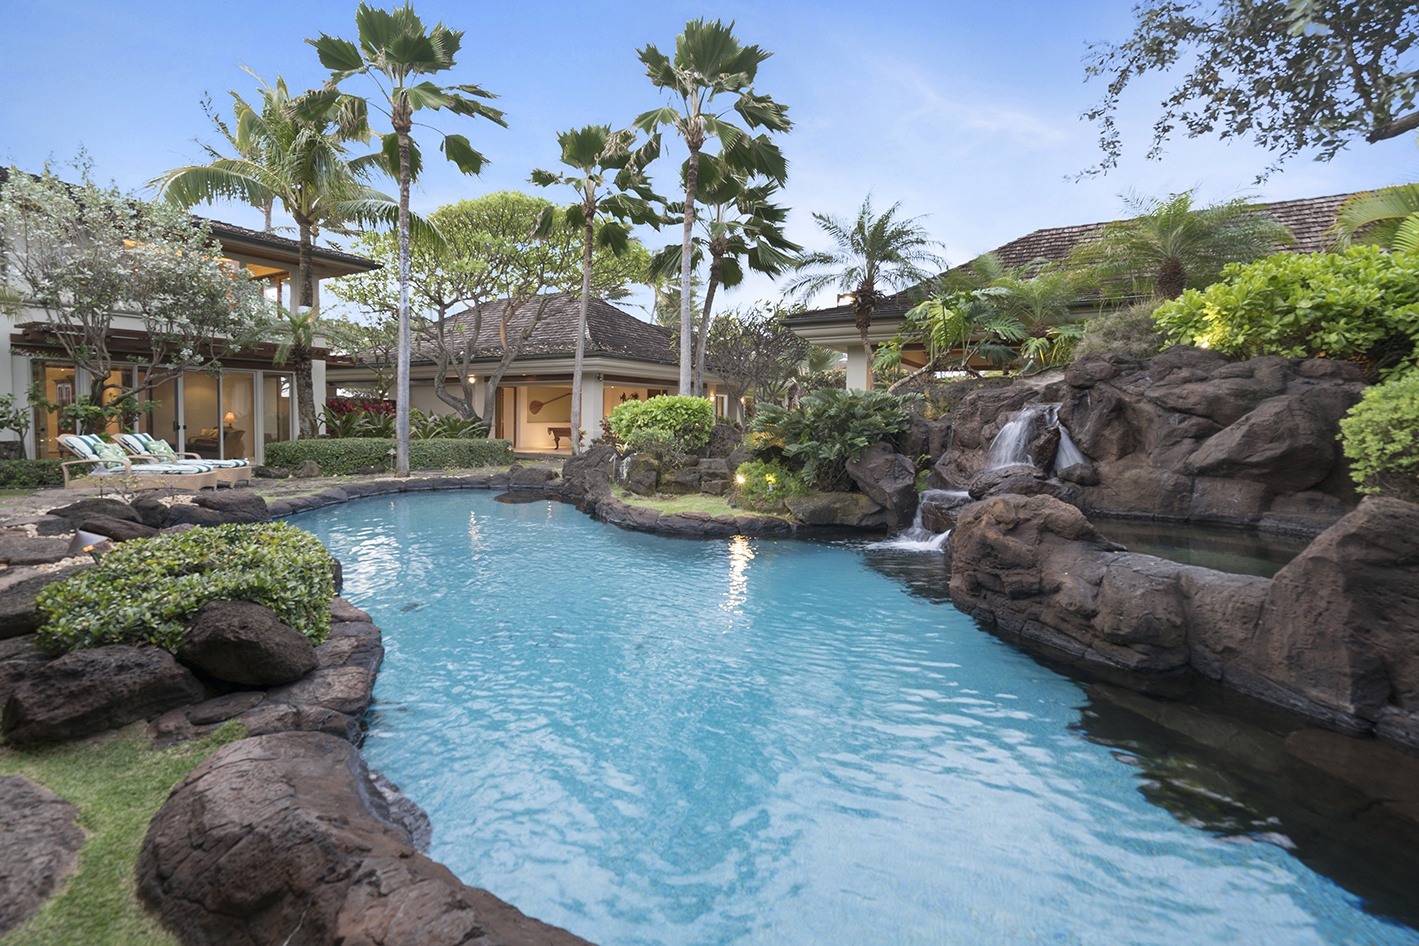 Kailua Vacation Rentals, Kailua's Kai Moena Estate - Tropical lagoon style pool with natural rocks and cascading waterfalls.